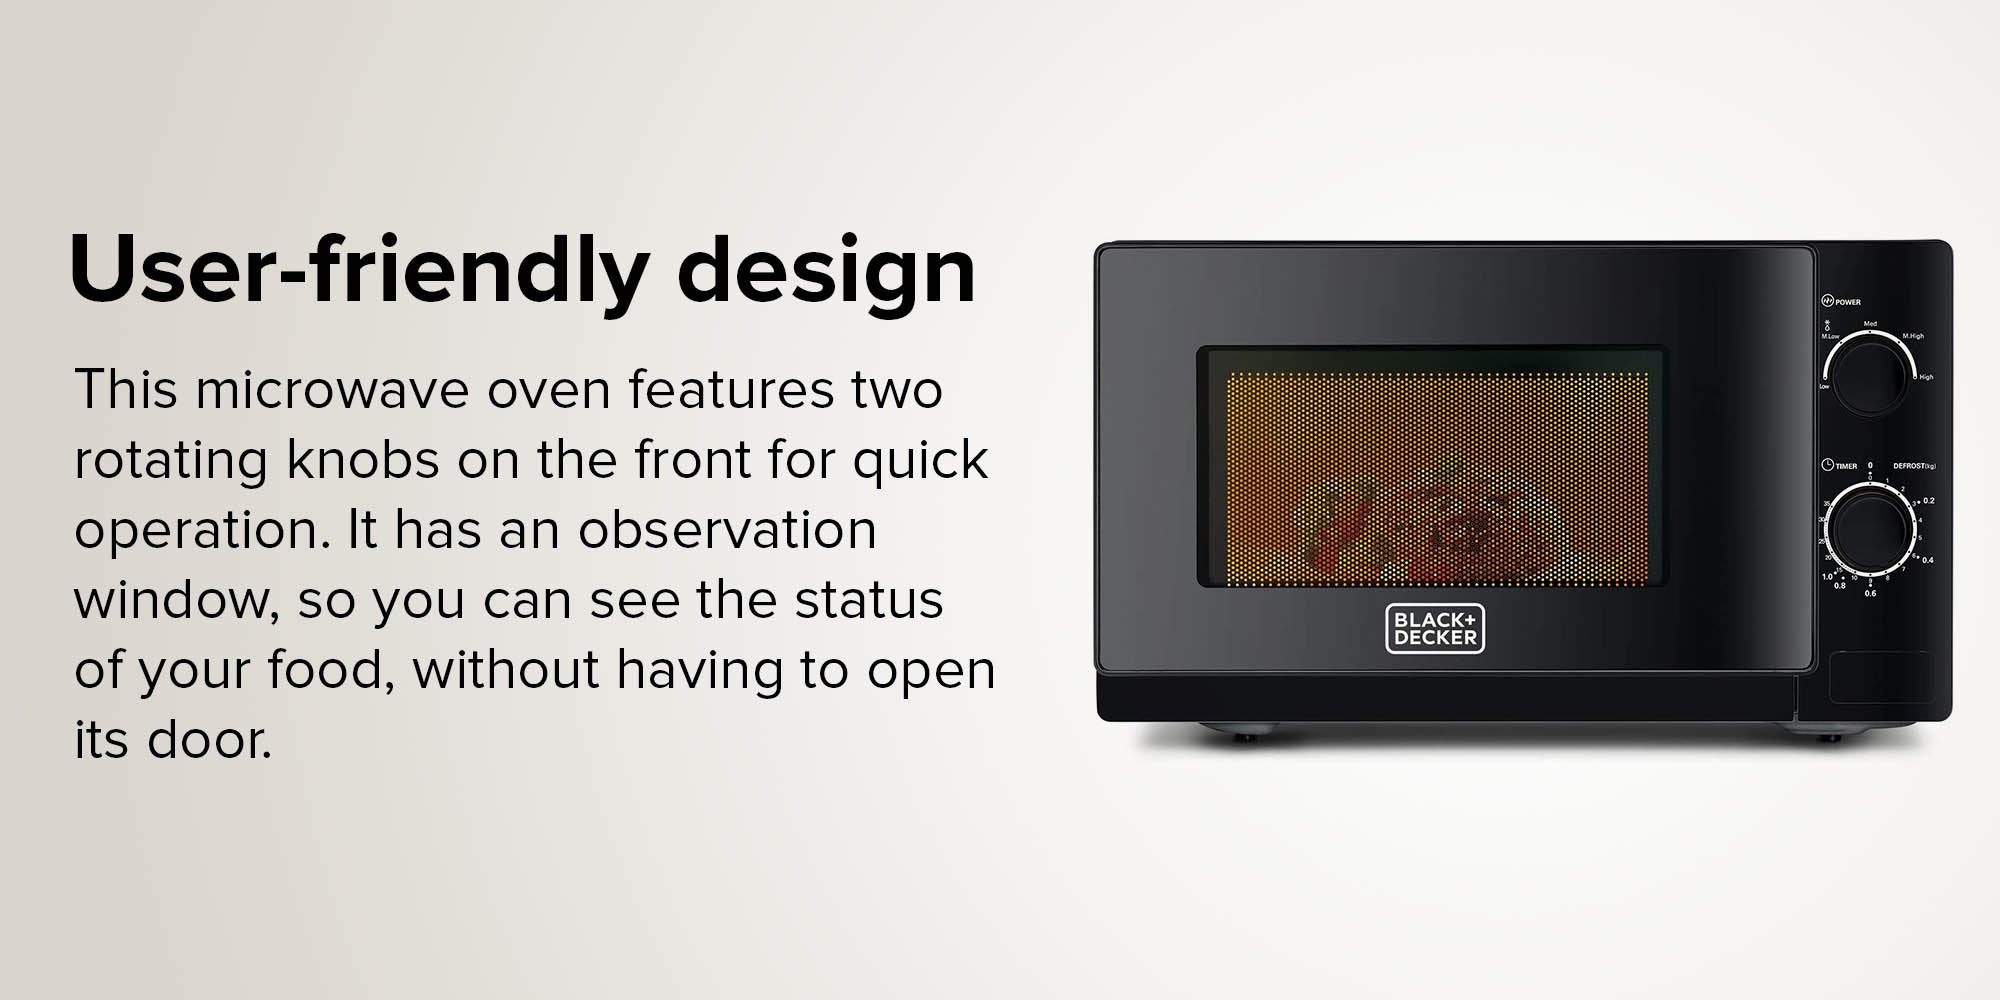 Black-Decker MZ2020P 20Ltr Microwave Oven